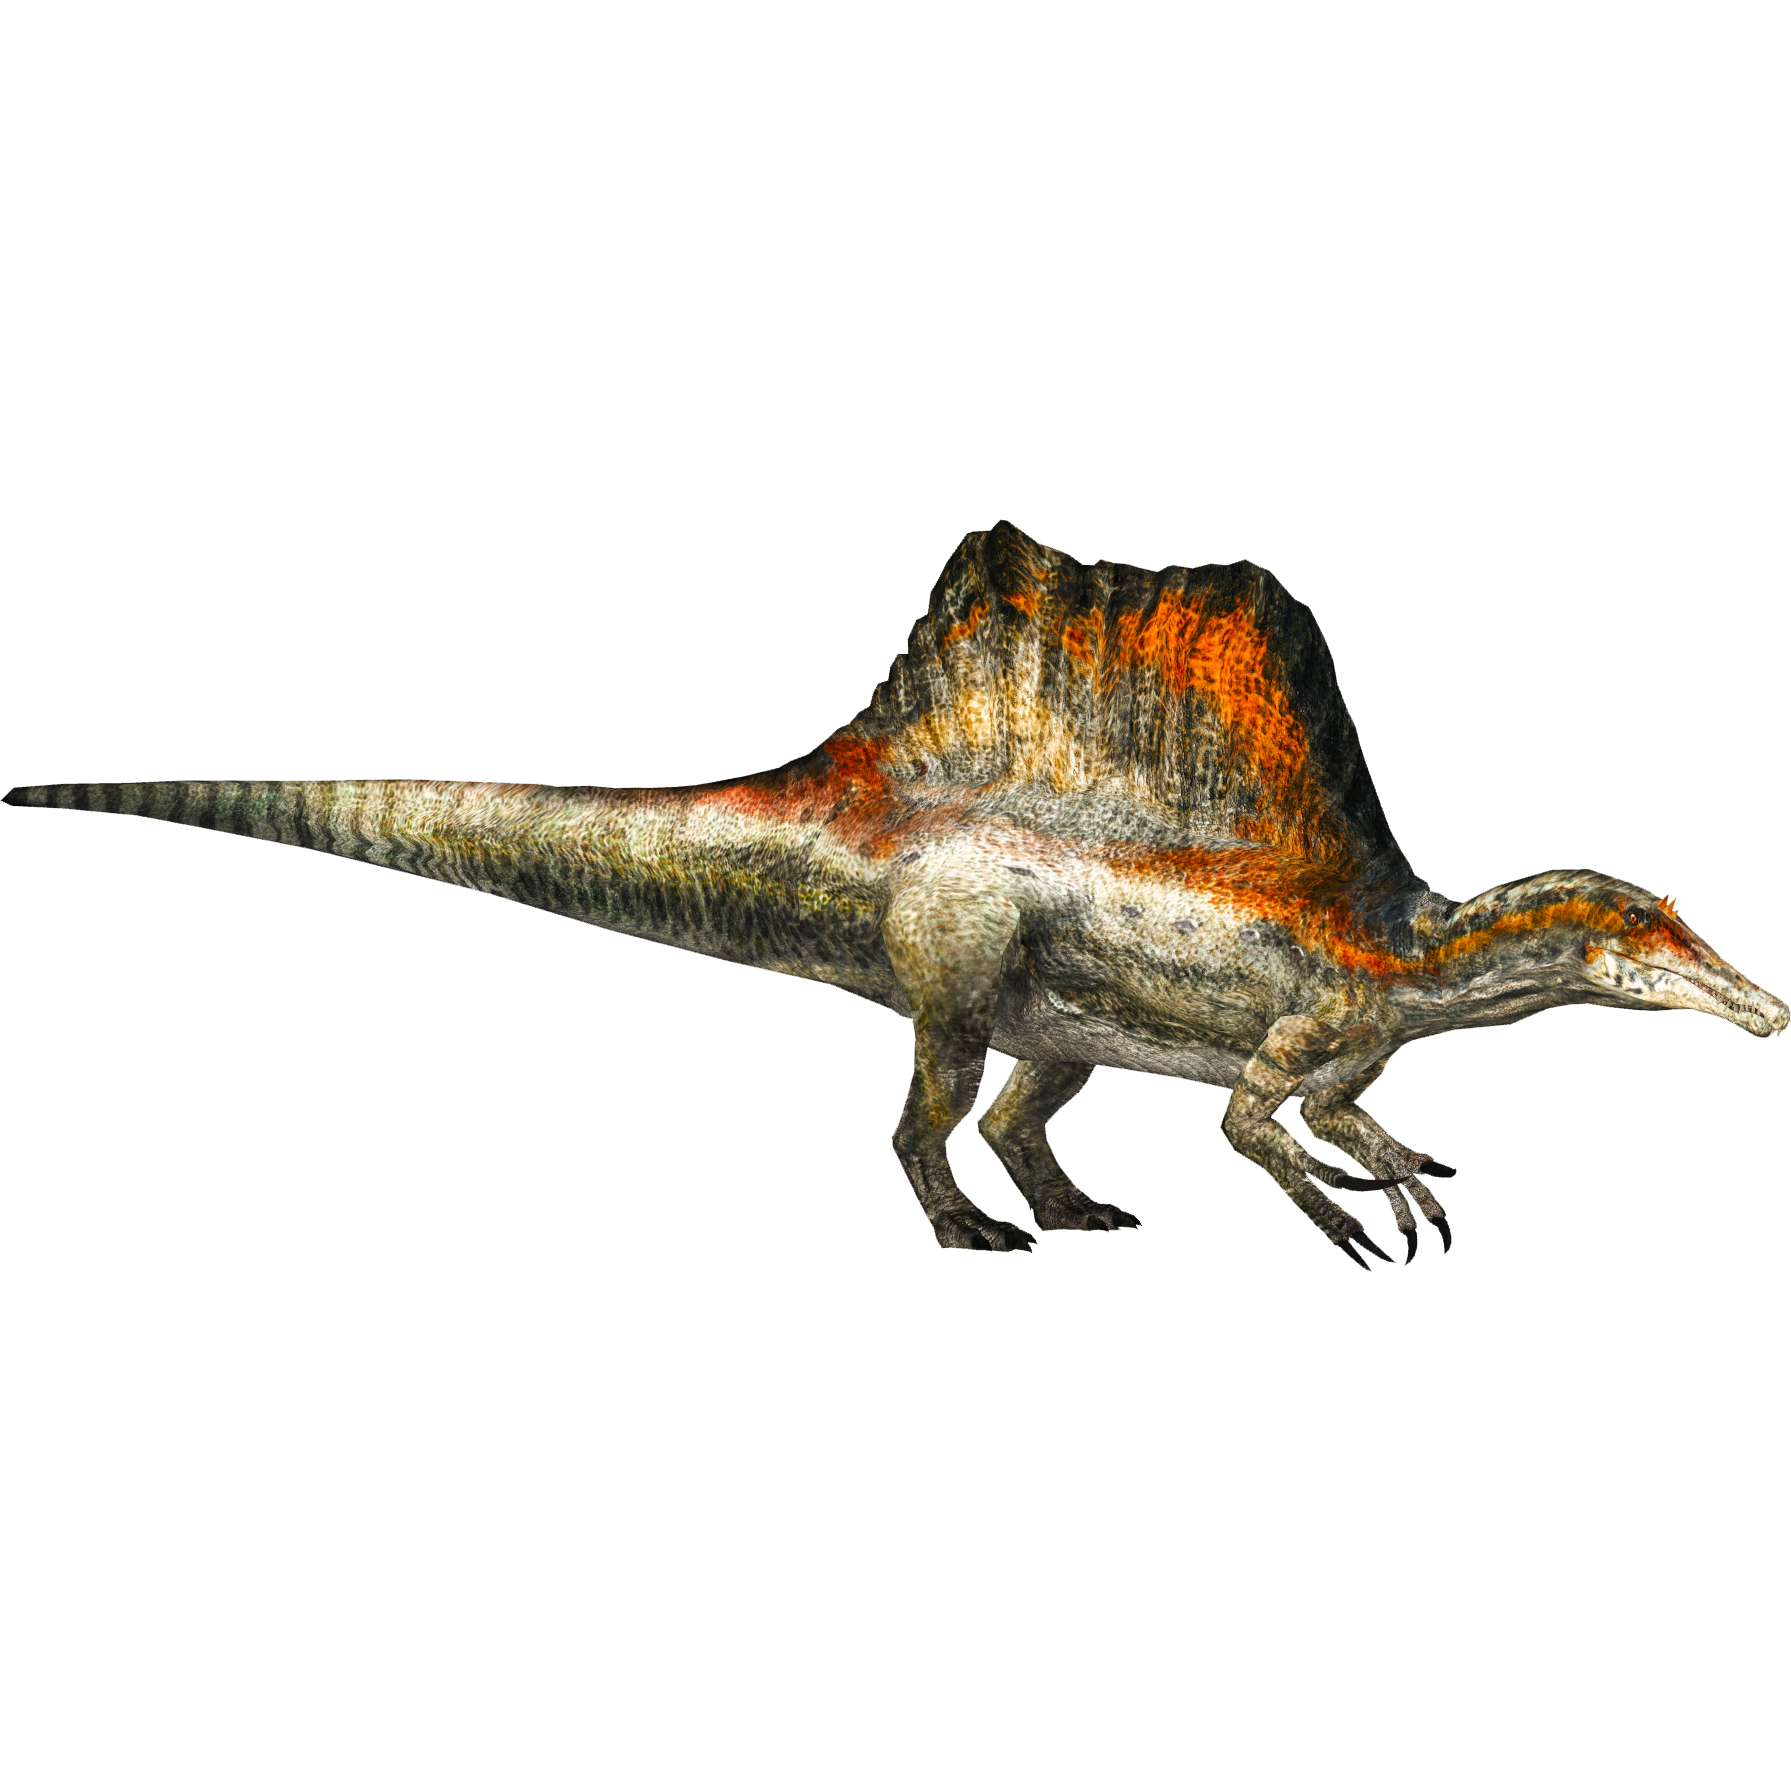 Zoo Tycoon 2 Showcase: Spinosaurus by ProfDanB on DeviantArt